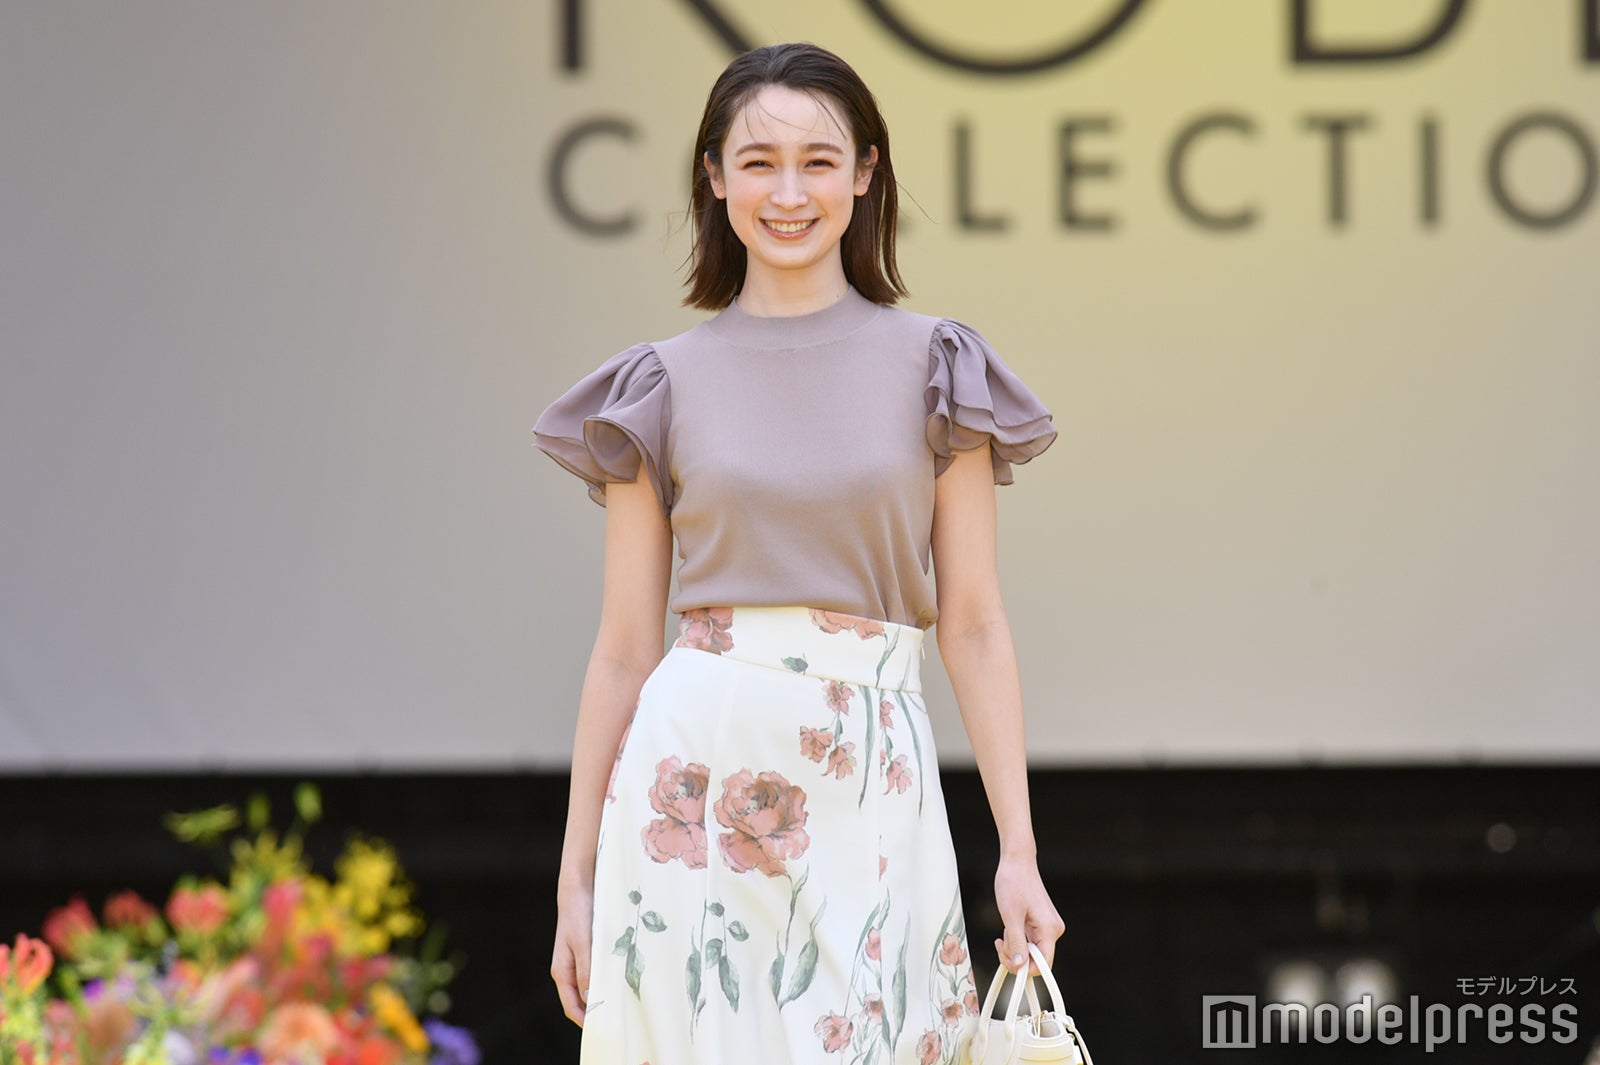 Startup Life: Rachel Lim, Co-Founder of Women's Fashion Brand Love, Bonito